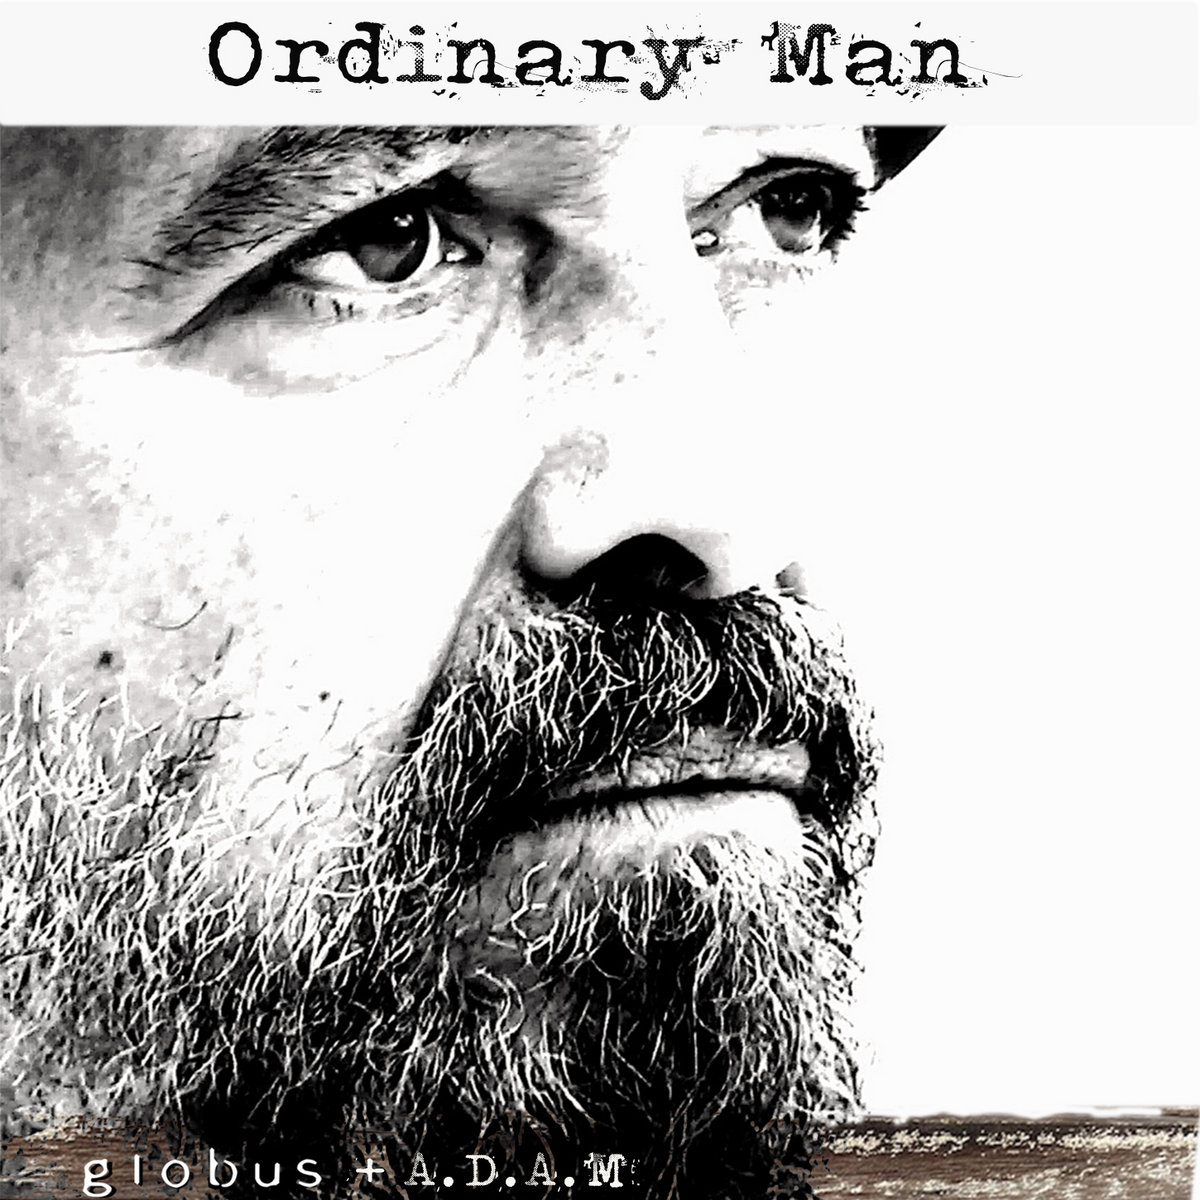 Globus x A.D.A.M. “Ordinary Man” single artwork